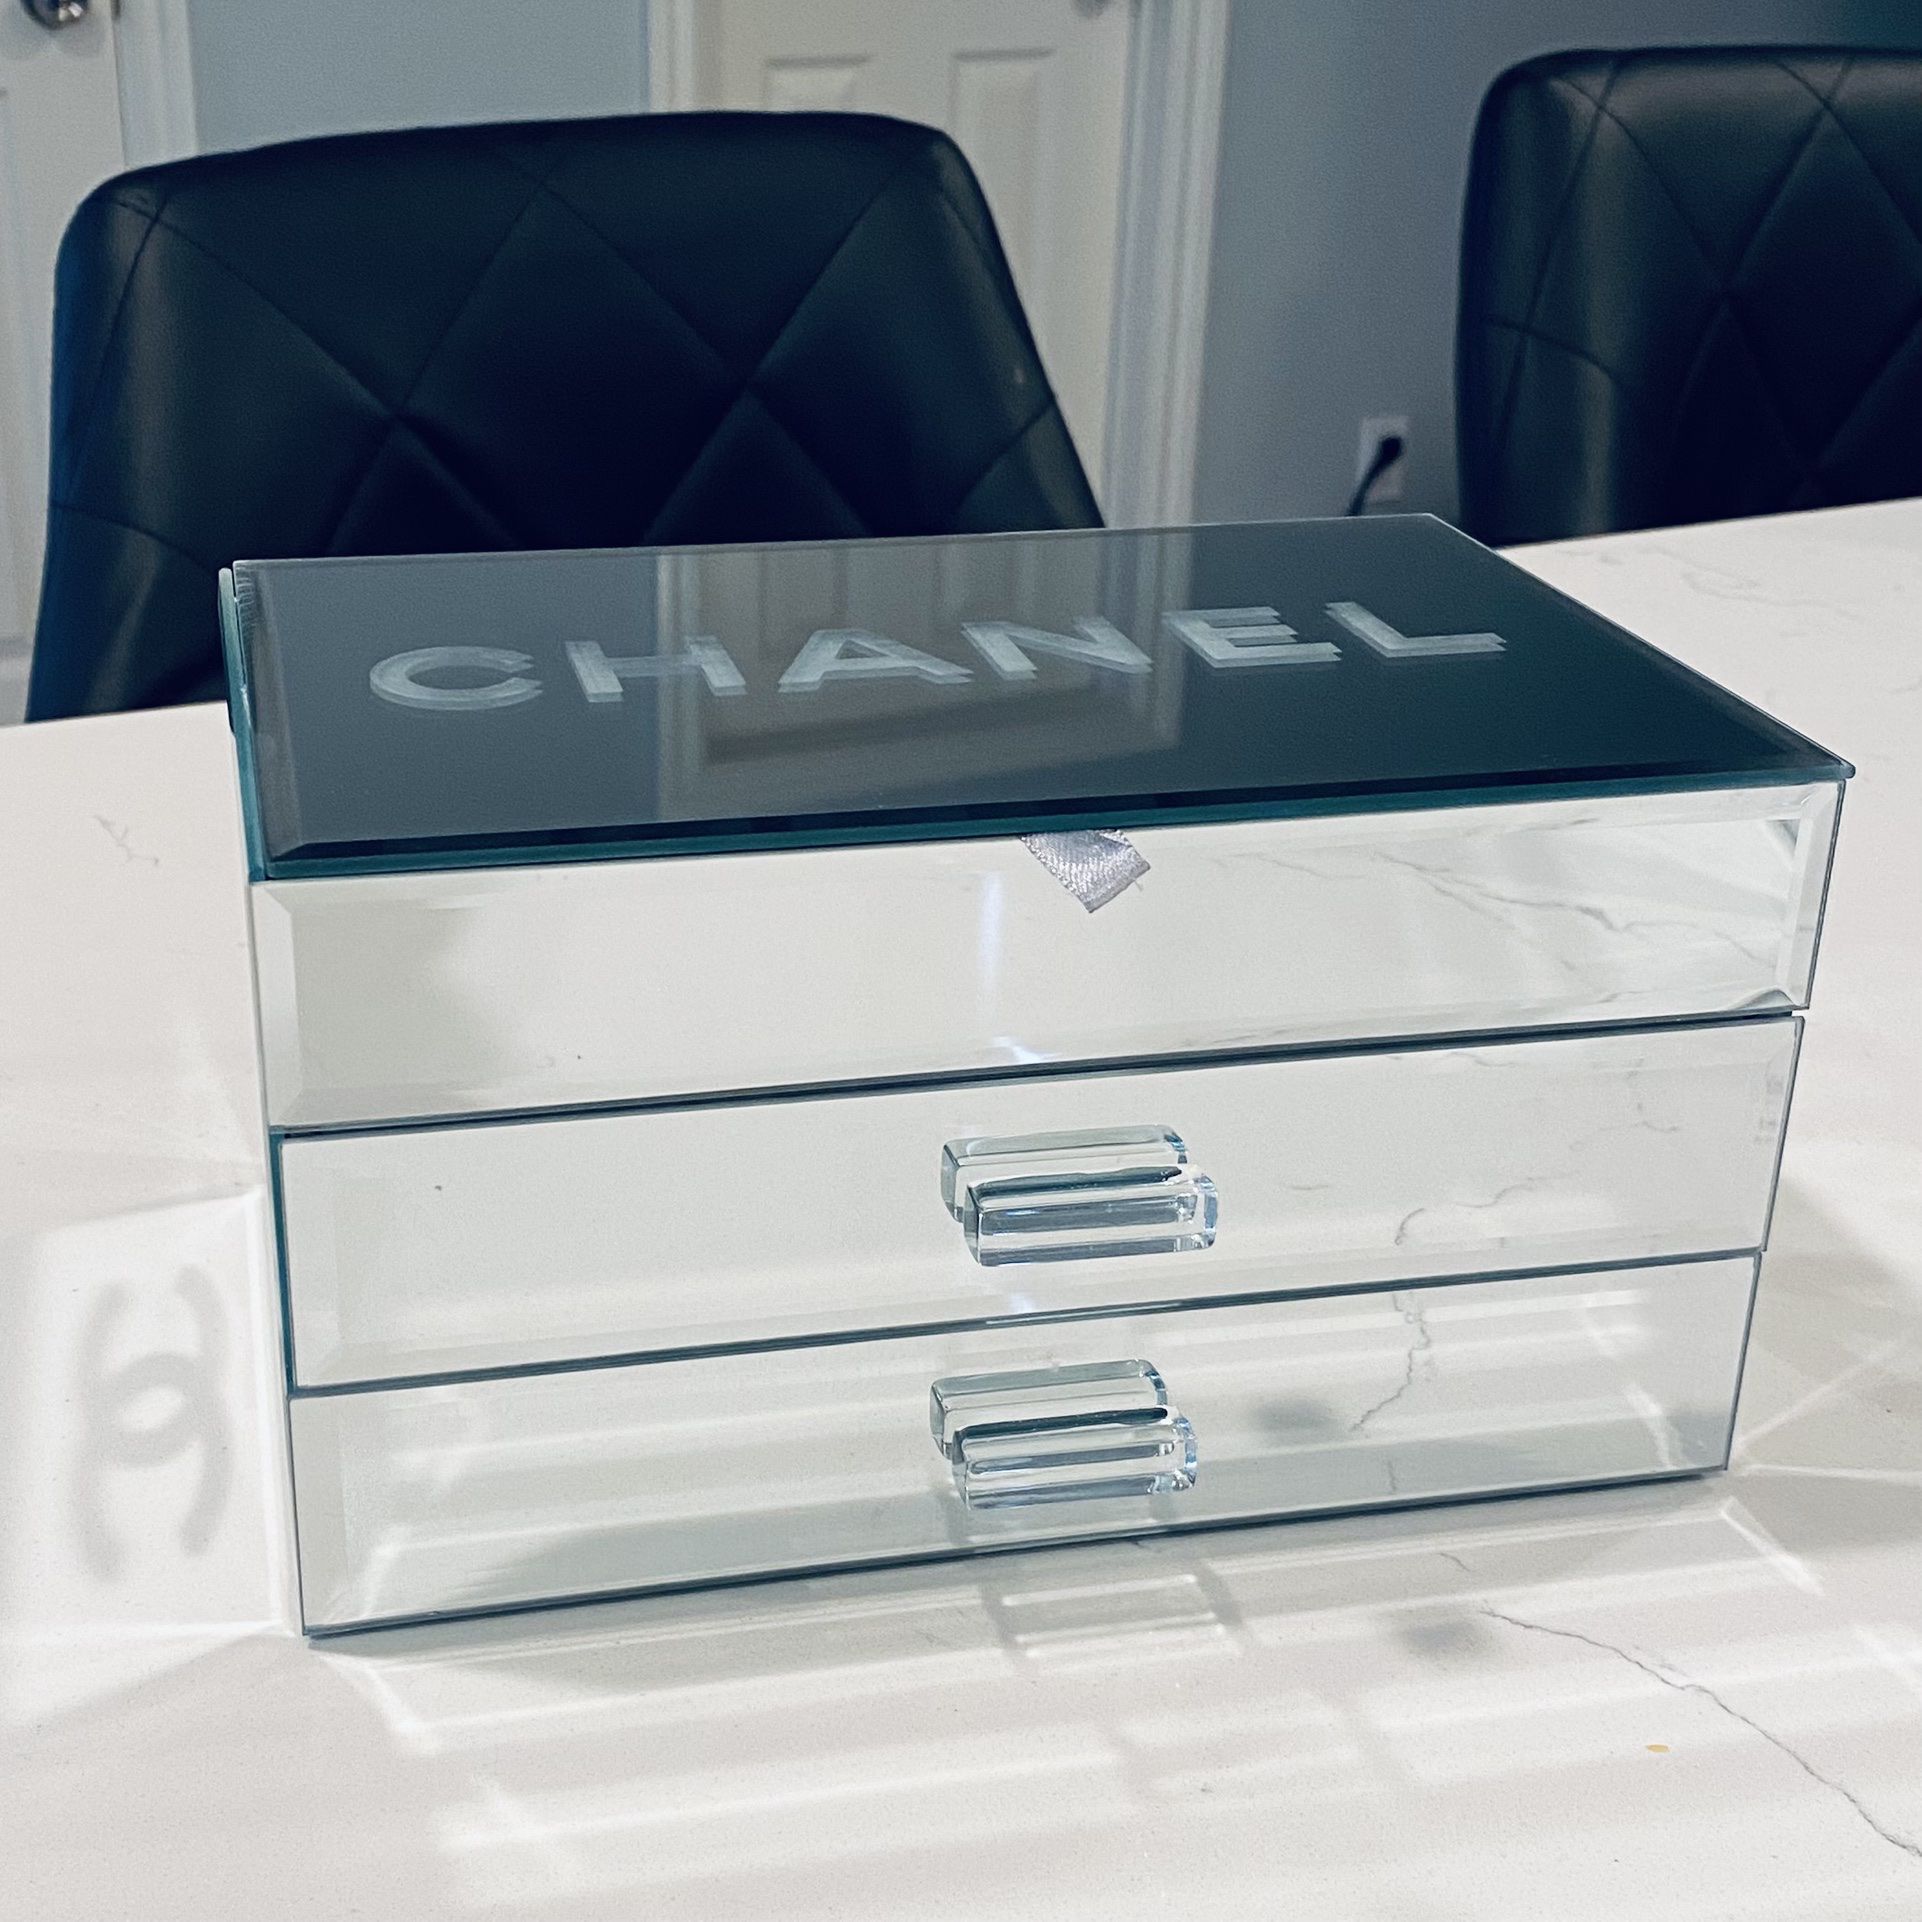 Custom Chanel Jewelry Box for Sale in Riverside, CA - OfferUp